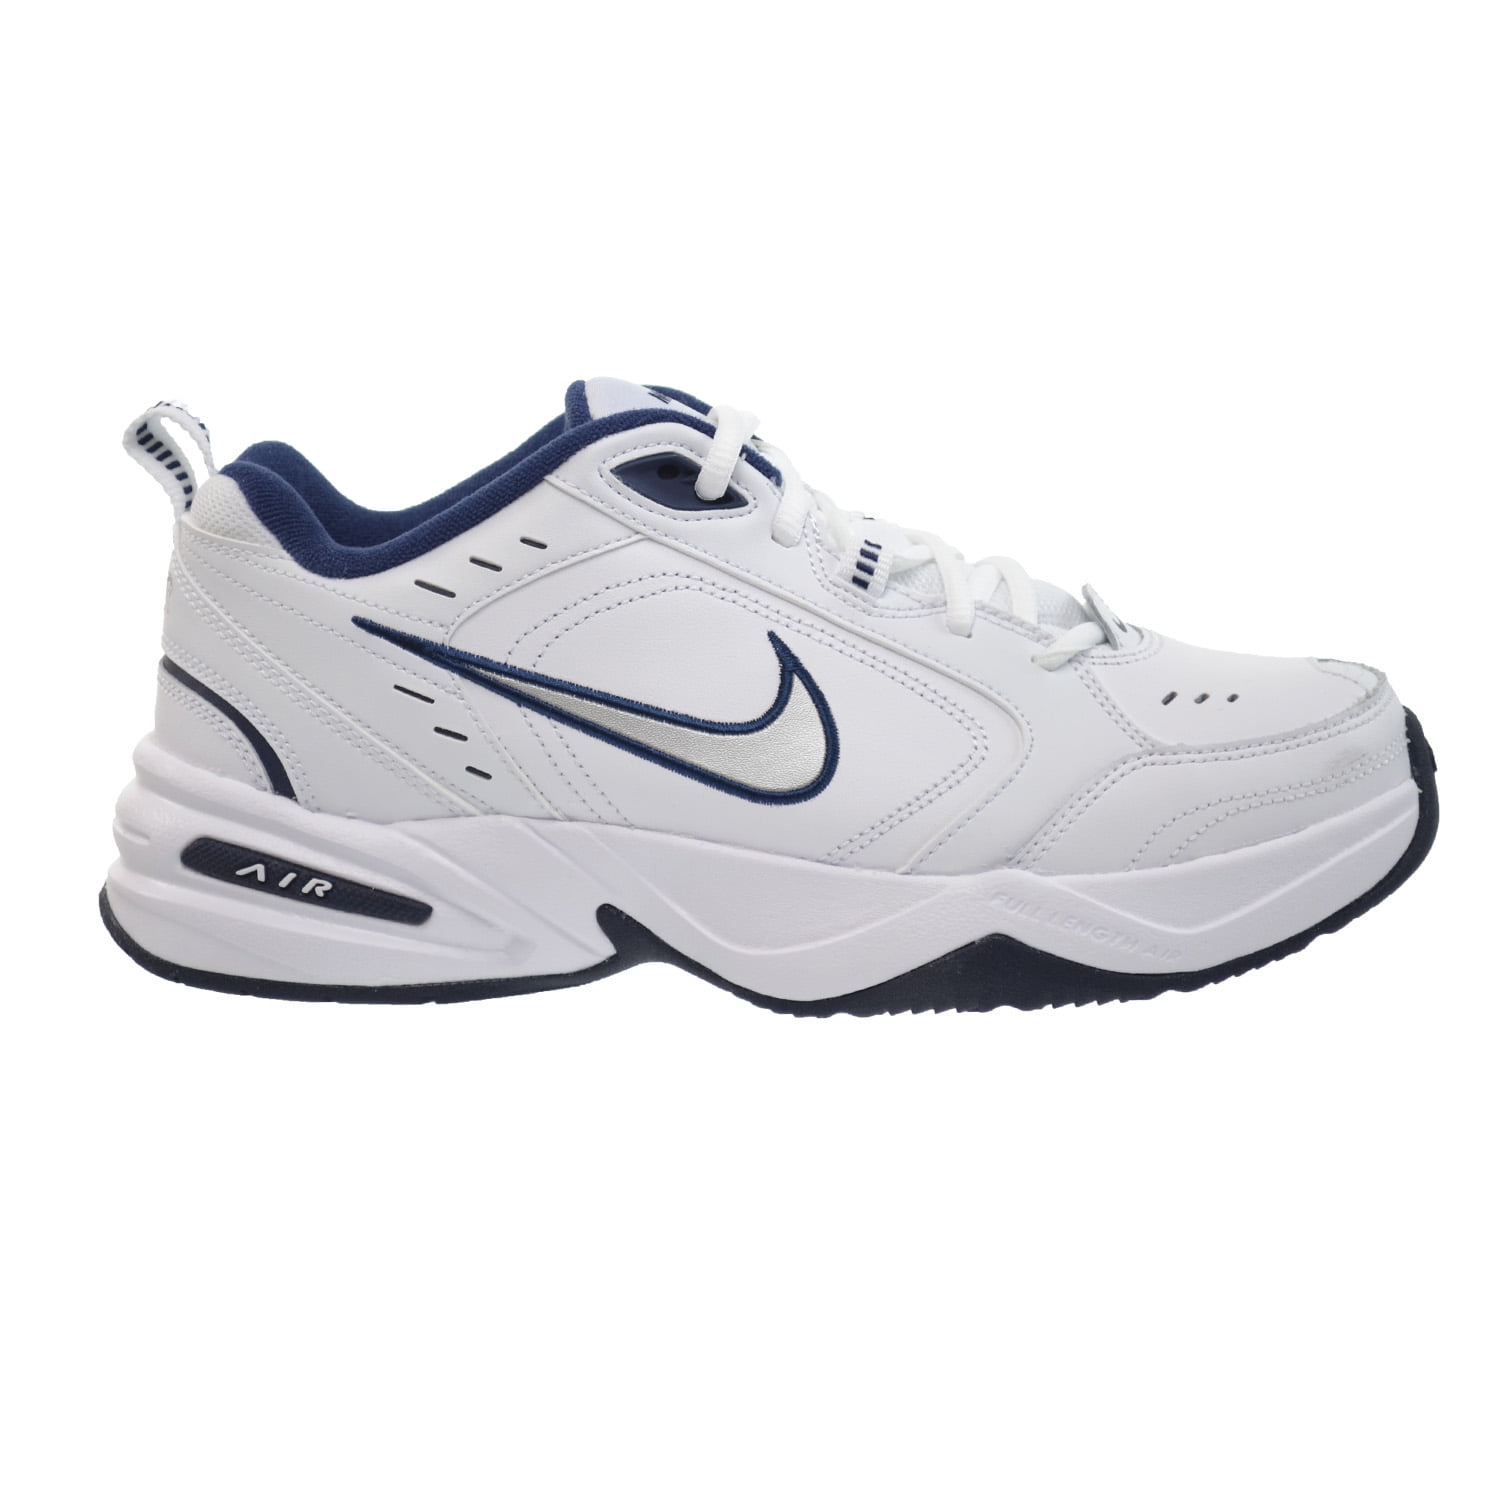 Nike Monarch IV Men's Shoes Silver 415445-102 Walmart.com